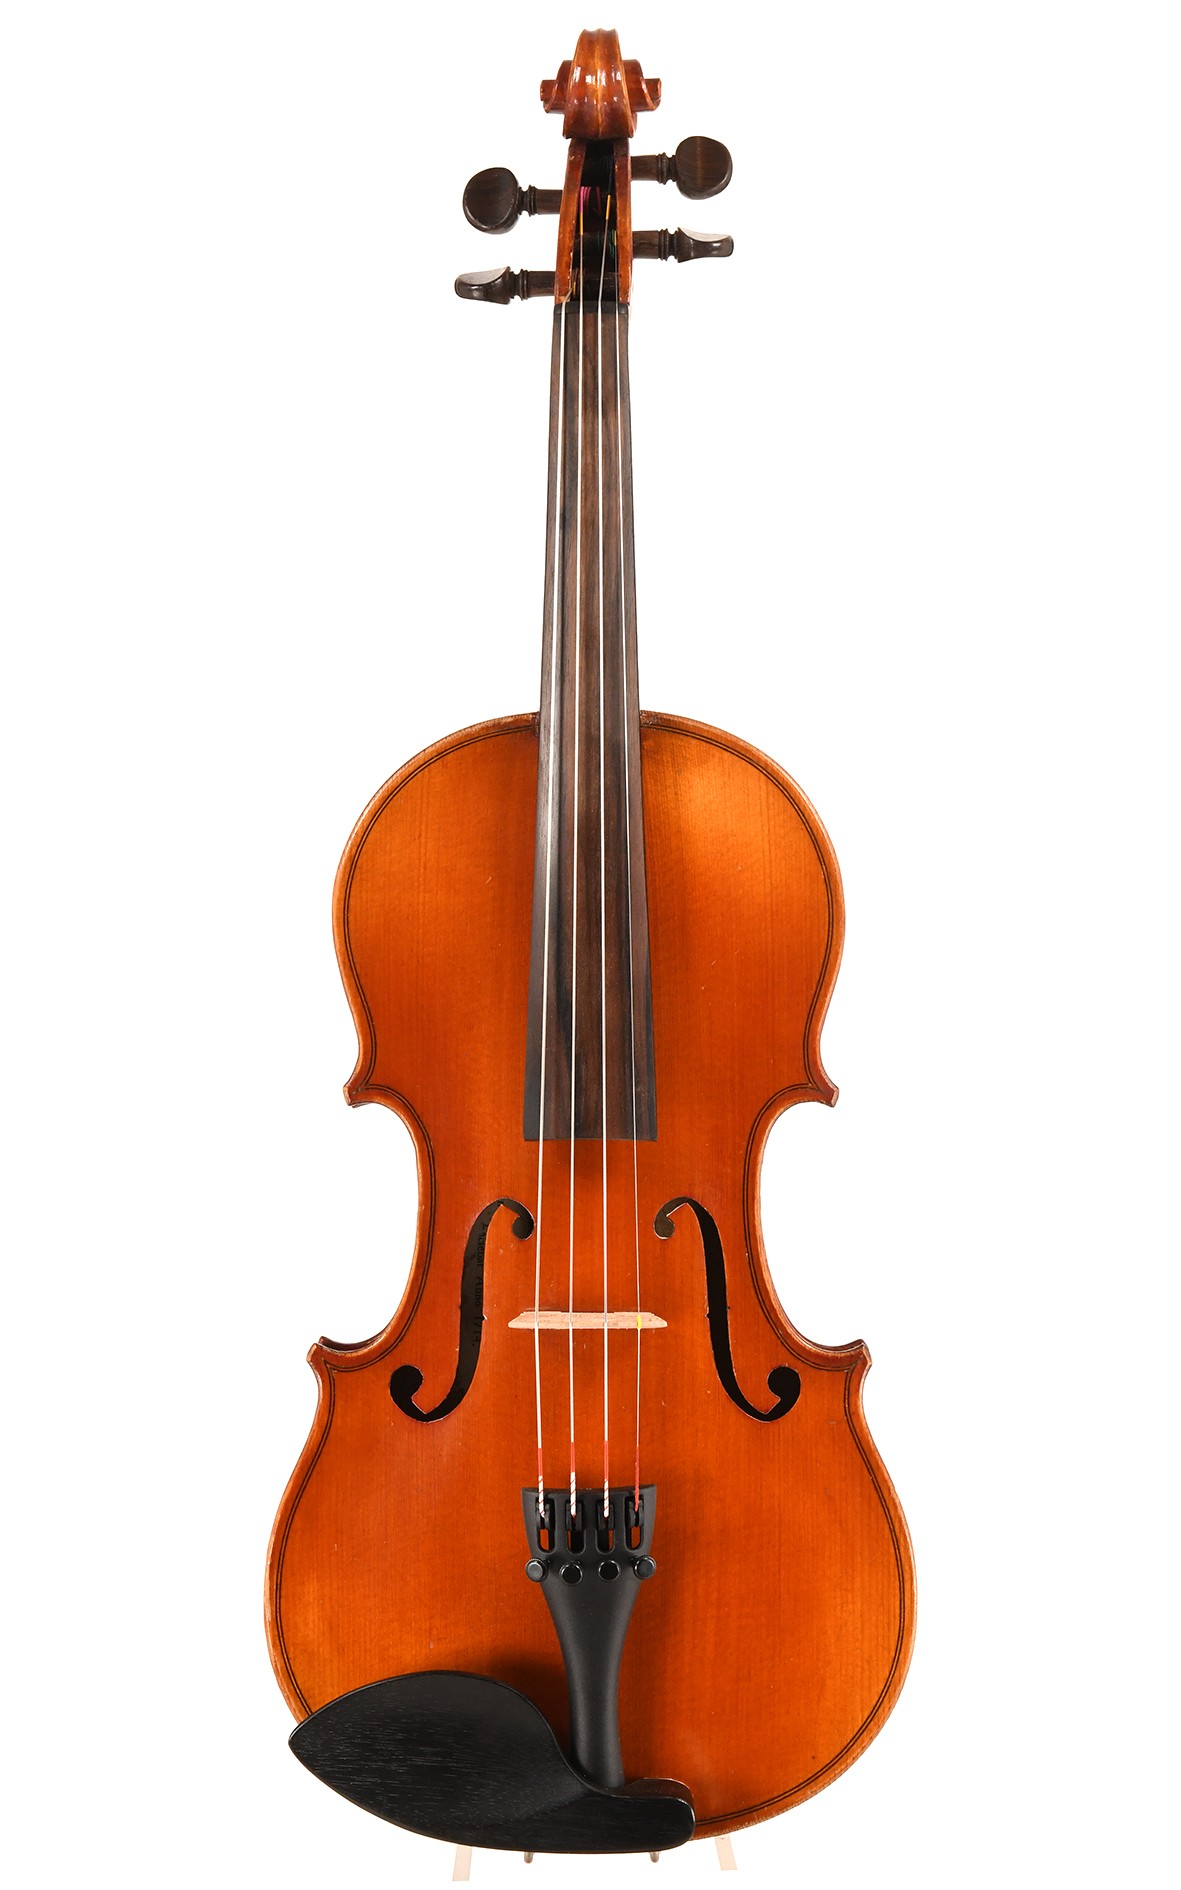 Attractive antique French 3/4 violin